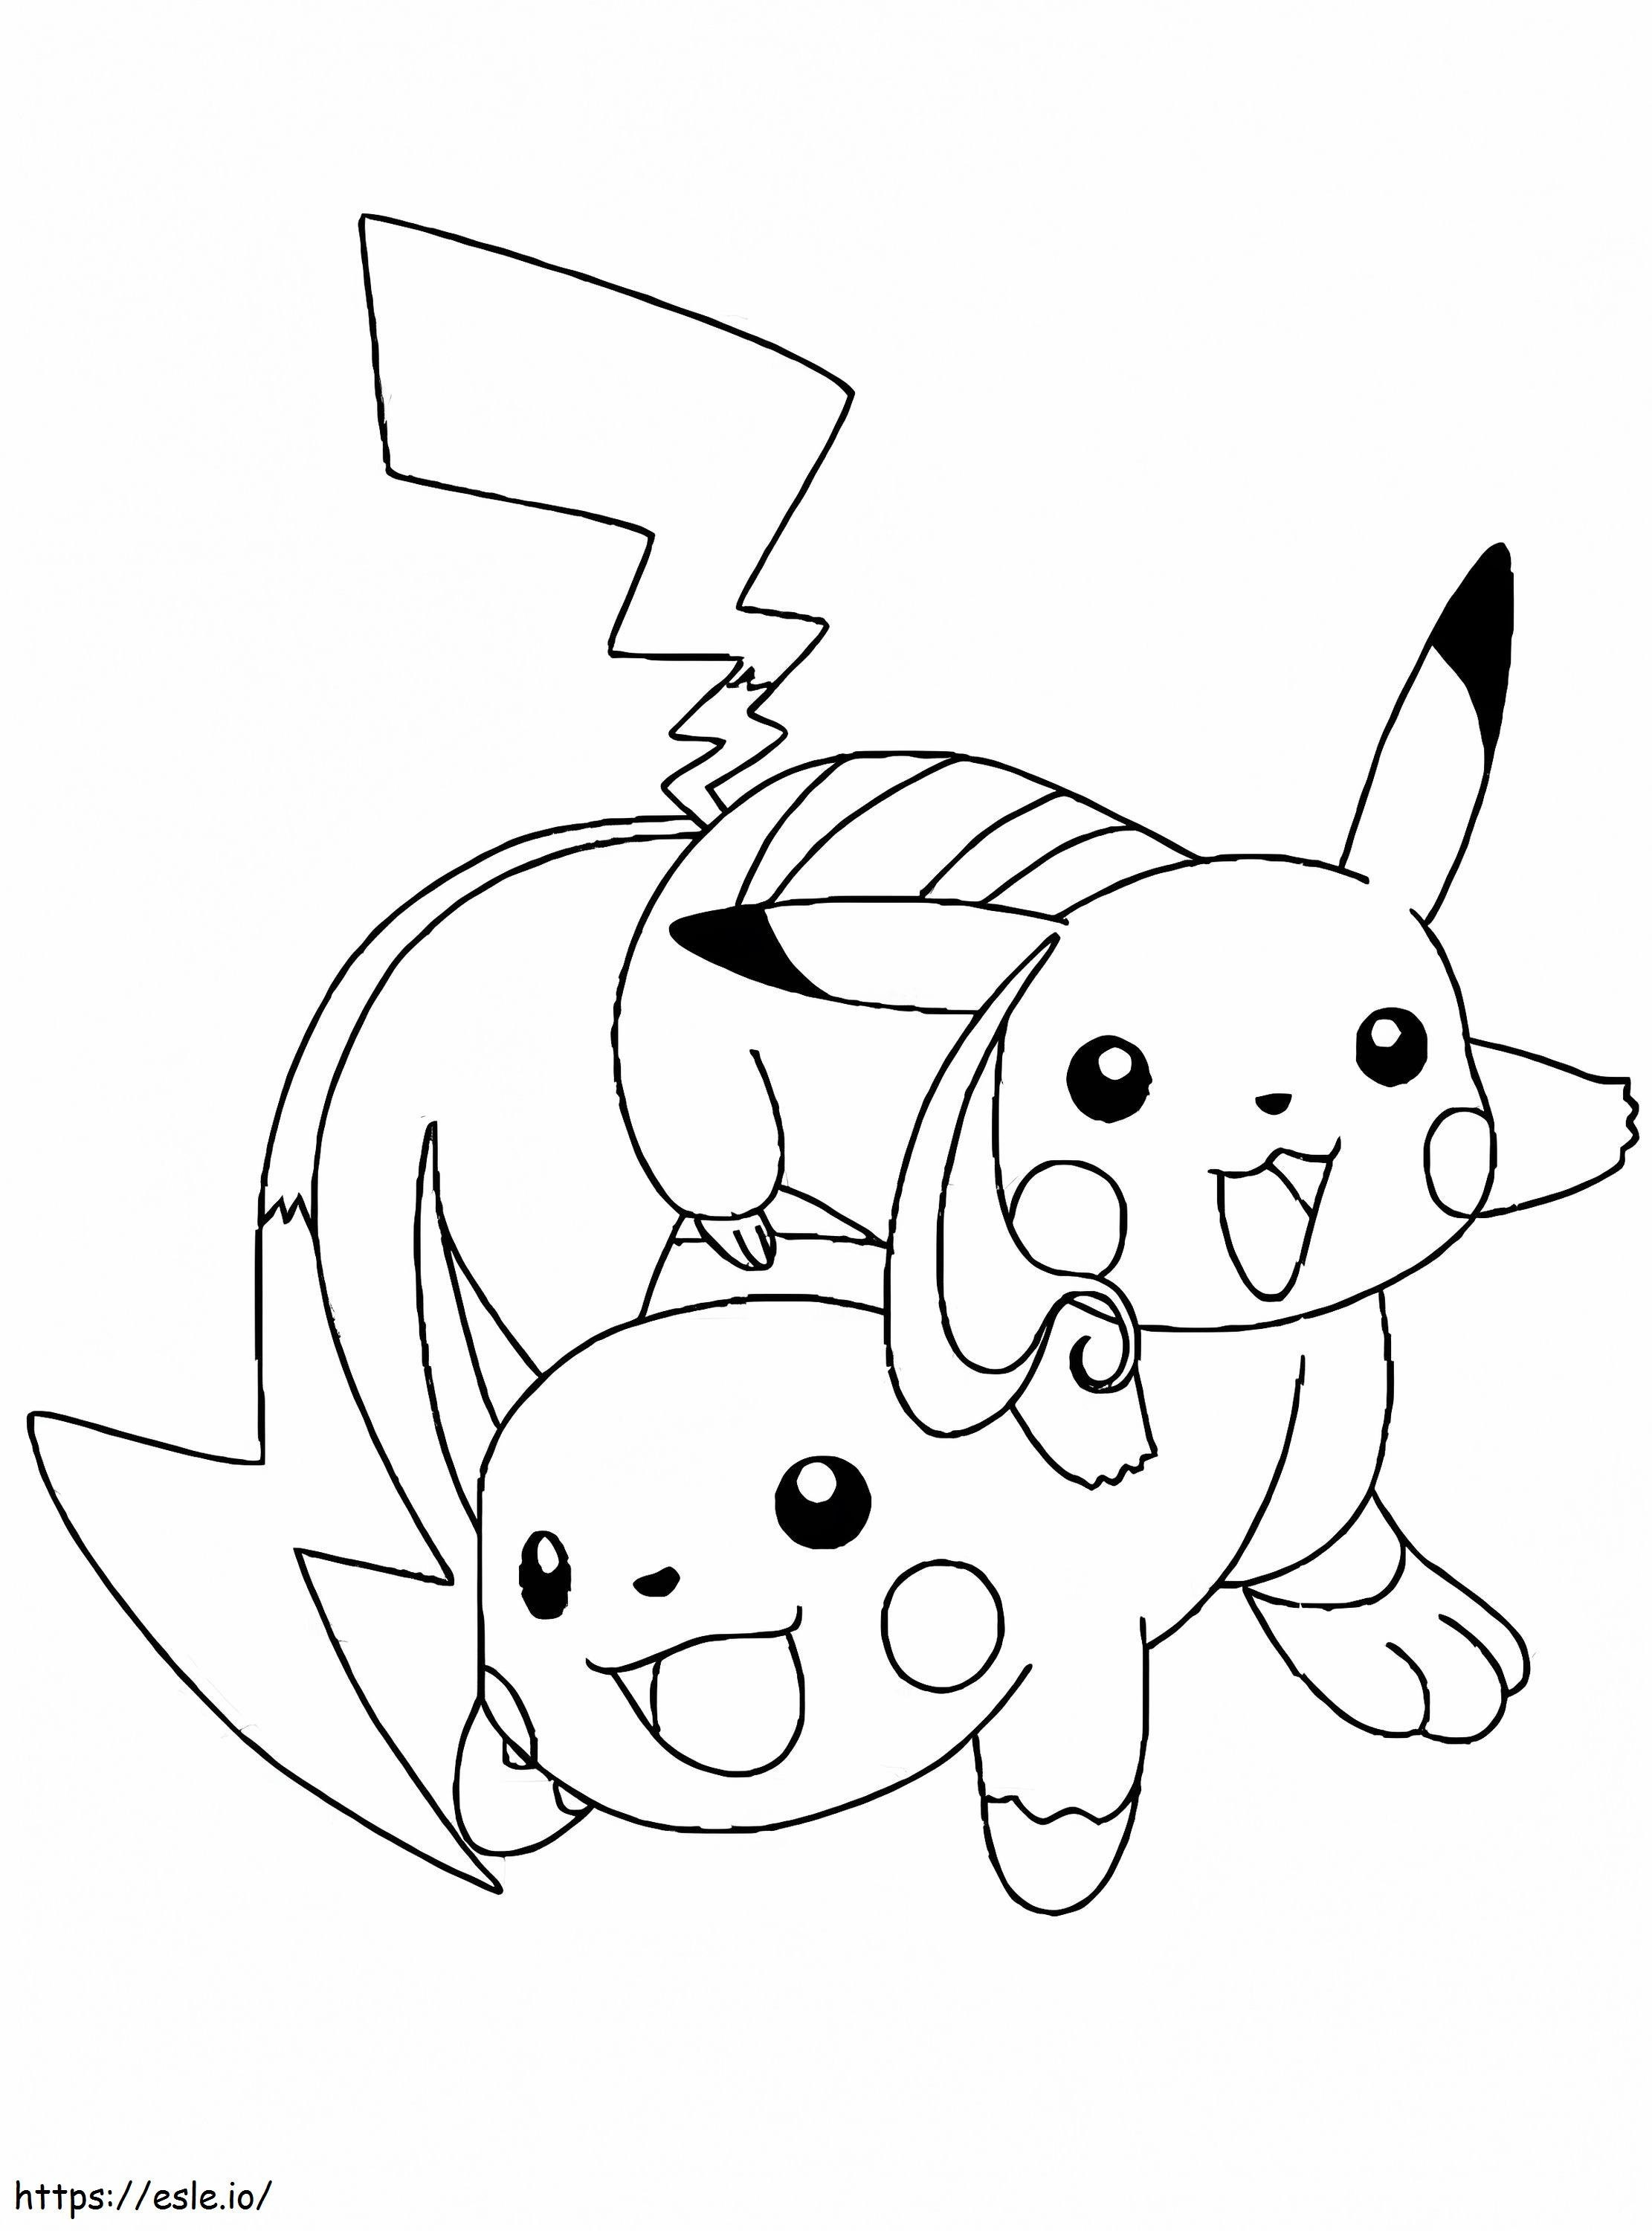 Raichu ile Pikachu boyama